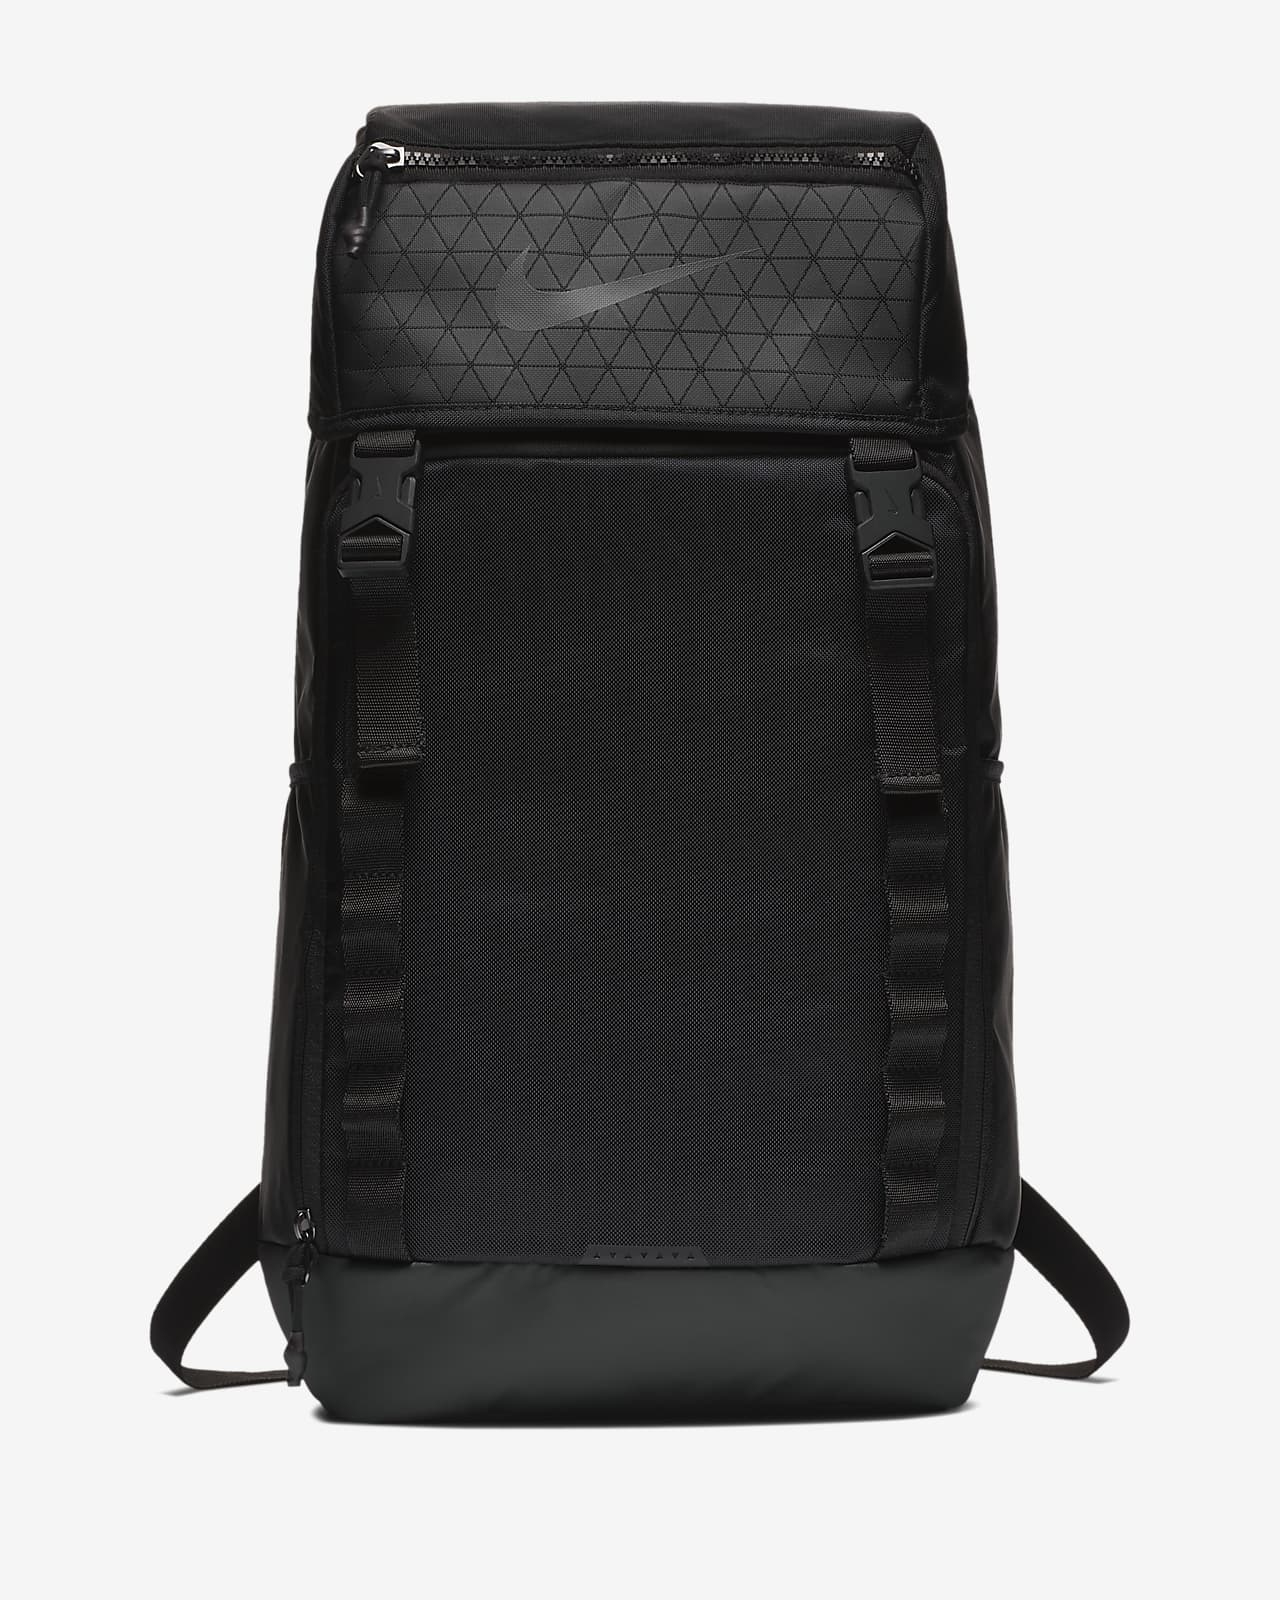 vapor speed backpack online -